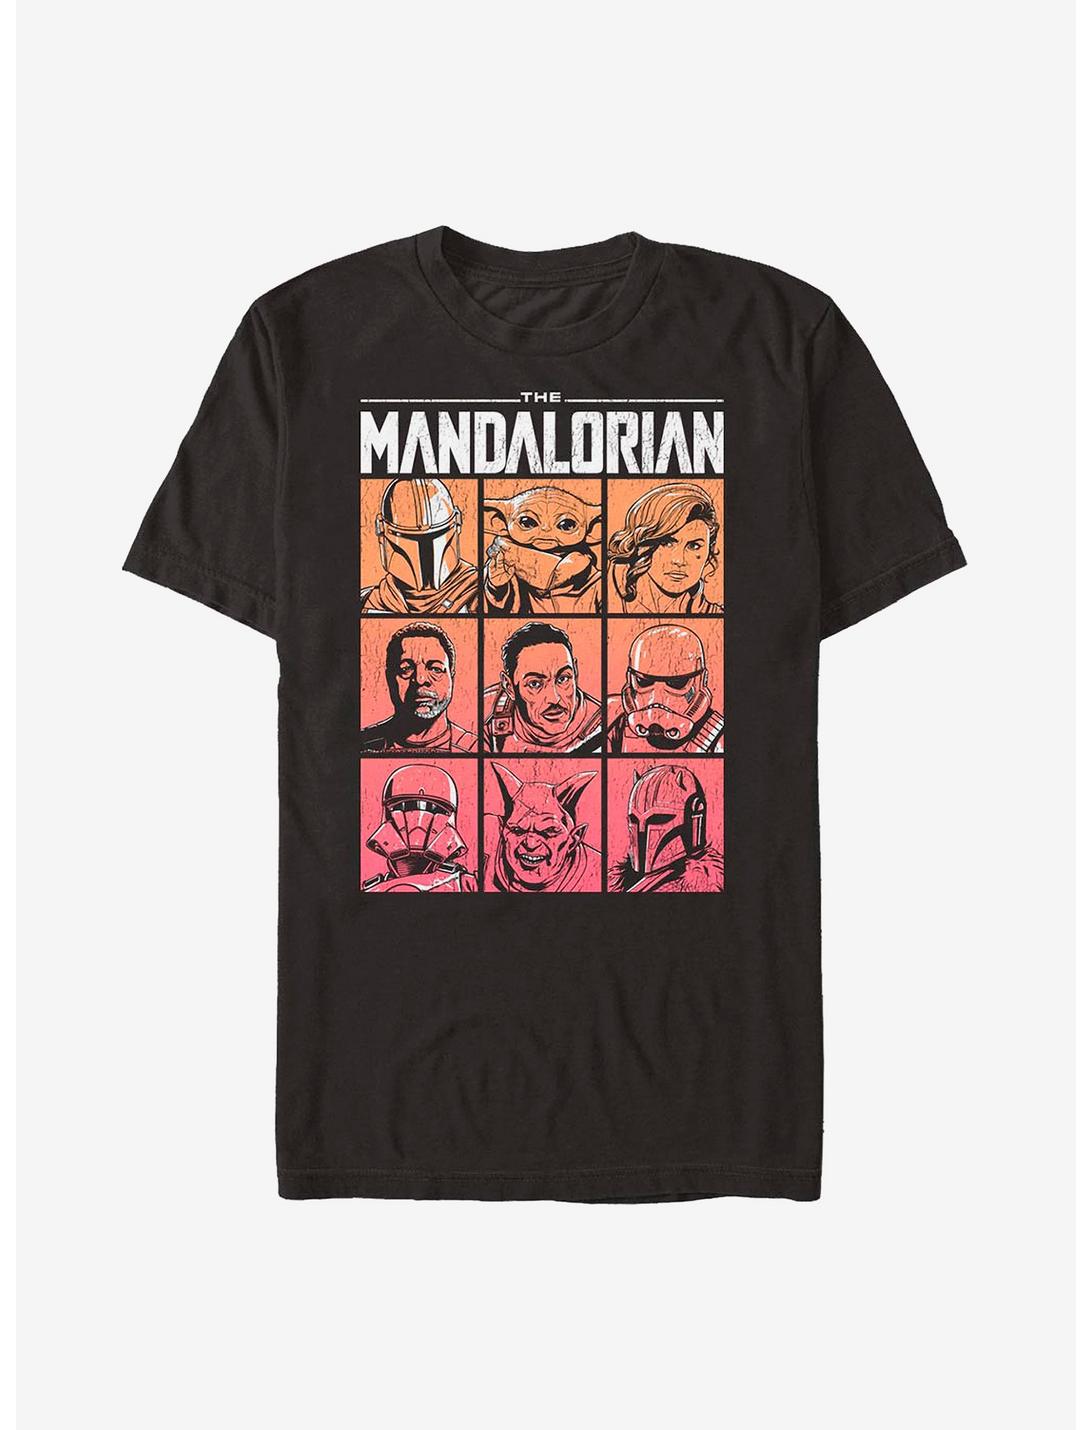 Plus Size Star Wars The Mandalorian All Star Cast T-Shirt, BLACK, hi-res